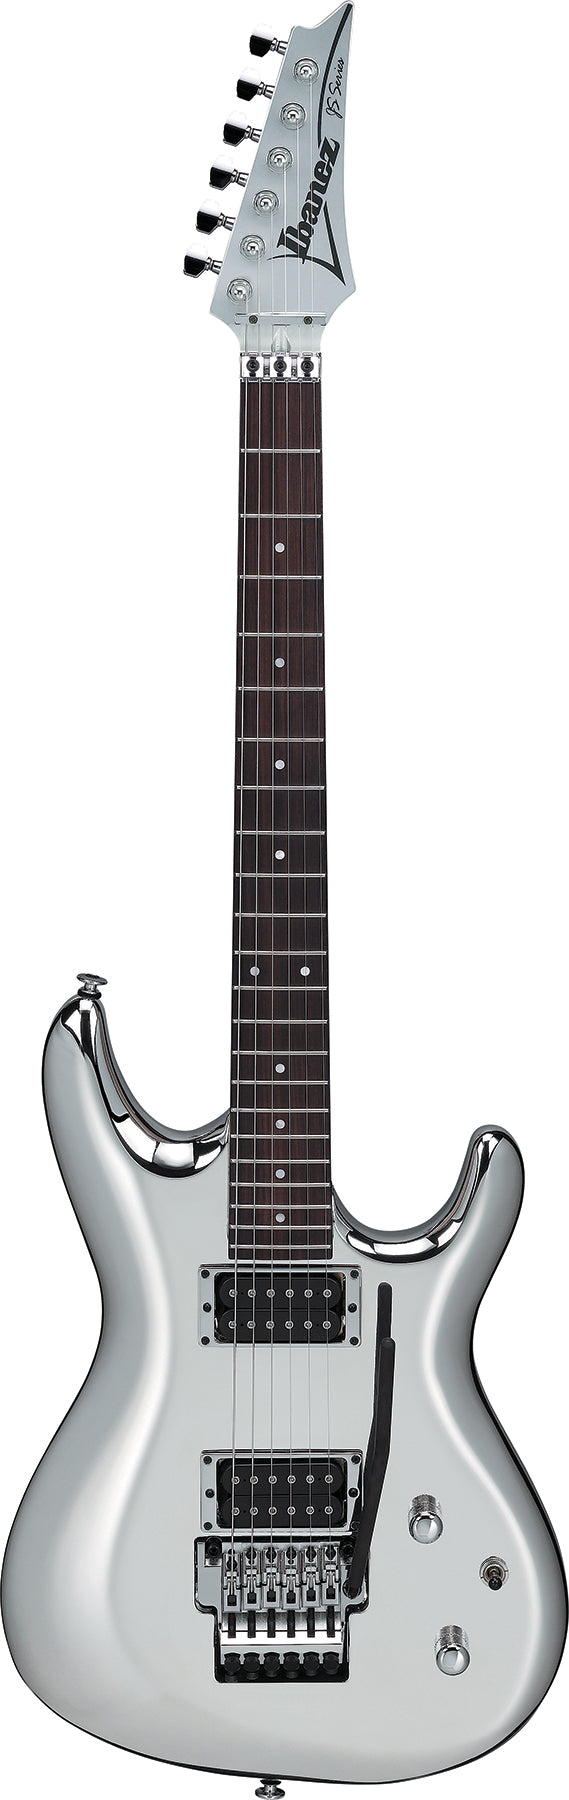 Ibanez JS3cr Joe Satriani Signature Electric Guitar (Silver)